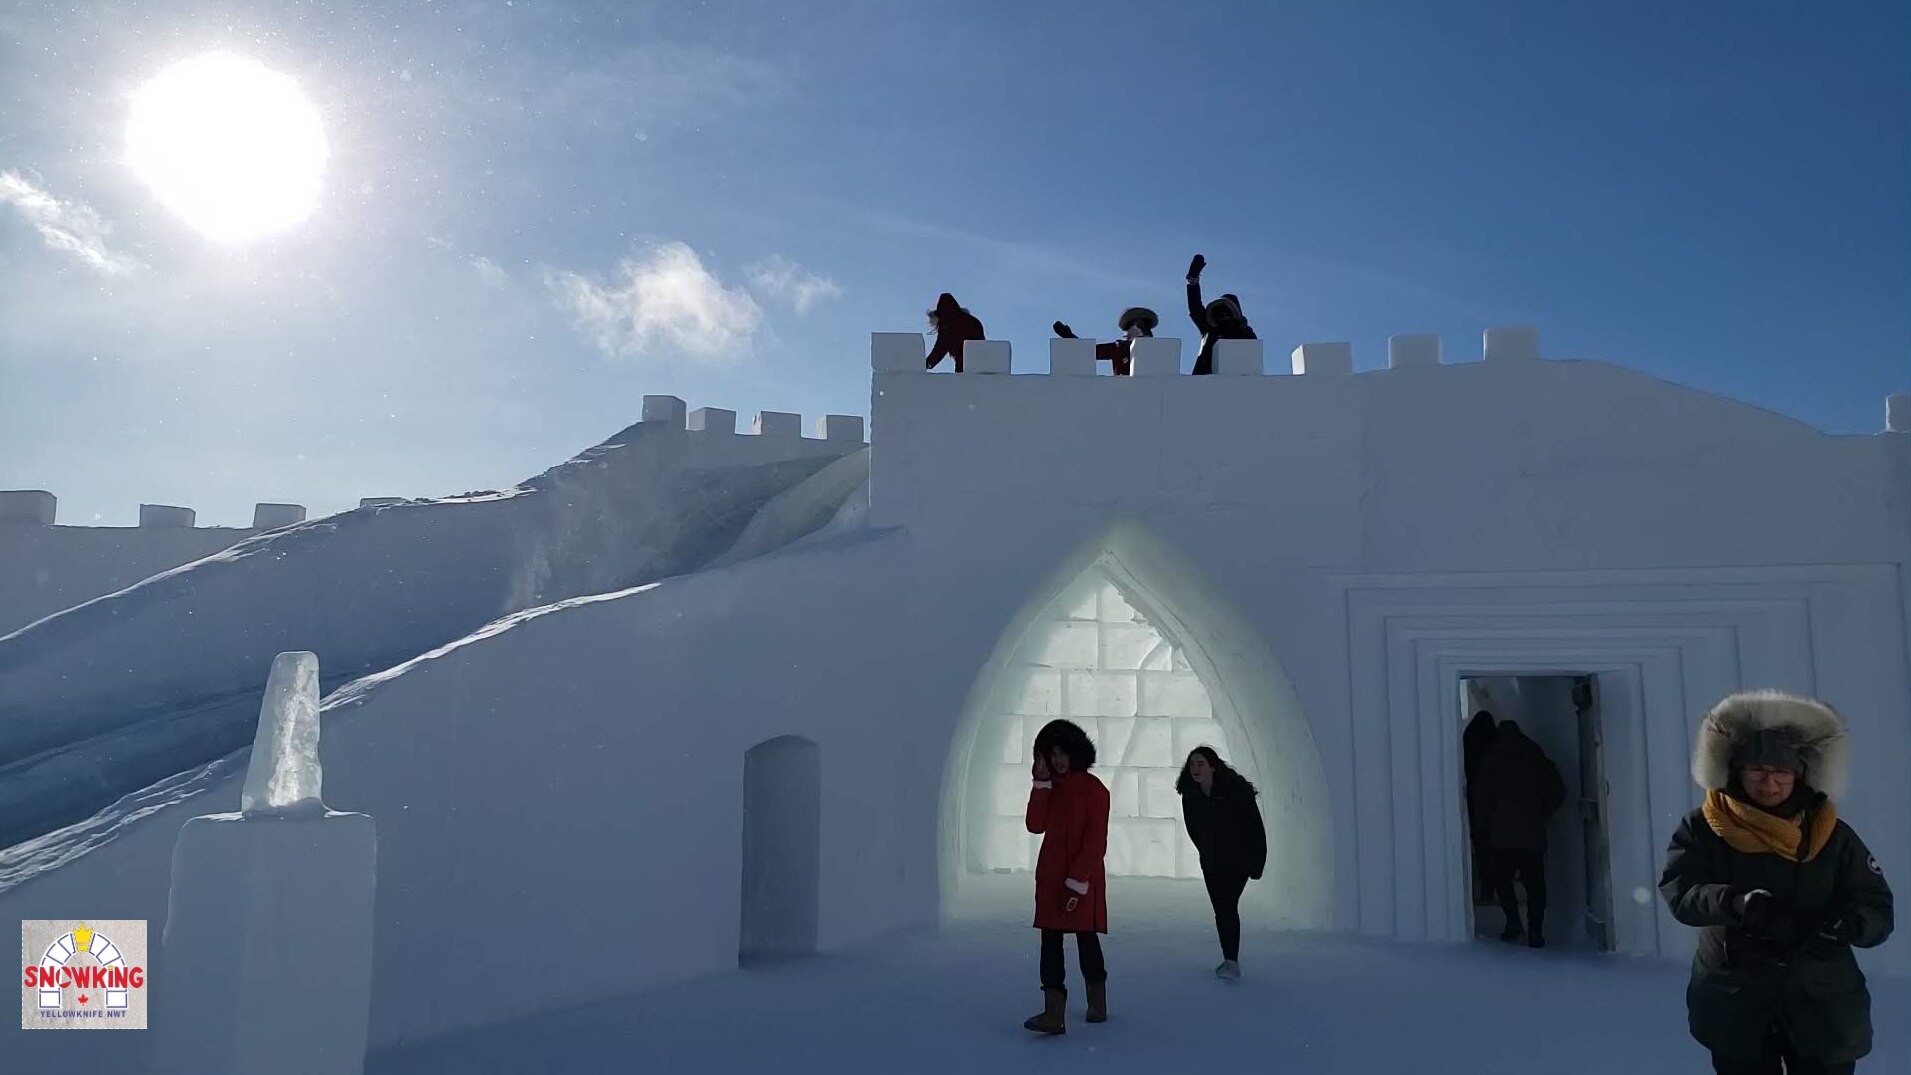 Special Yellowknife: son château de neige, sa vie culturelle.
Special Yellowknife: son château de neige, sa vie culturelle.